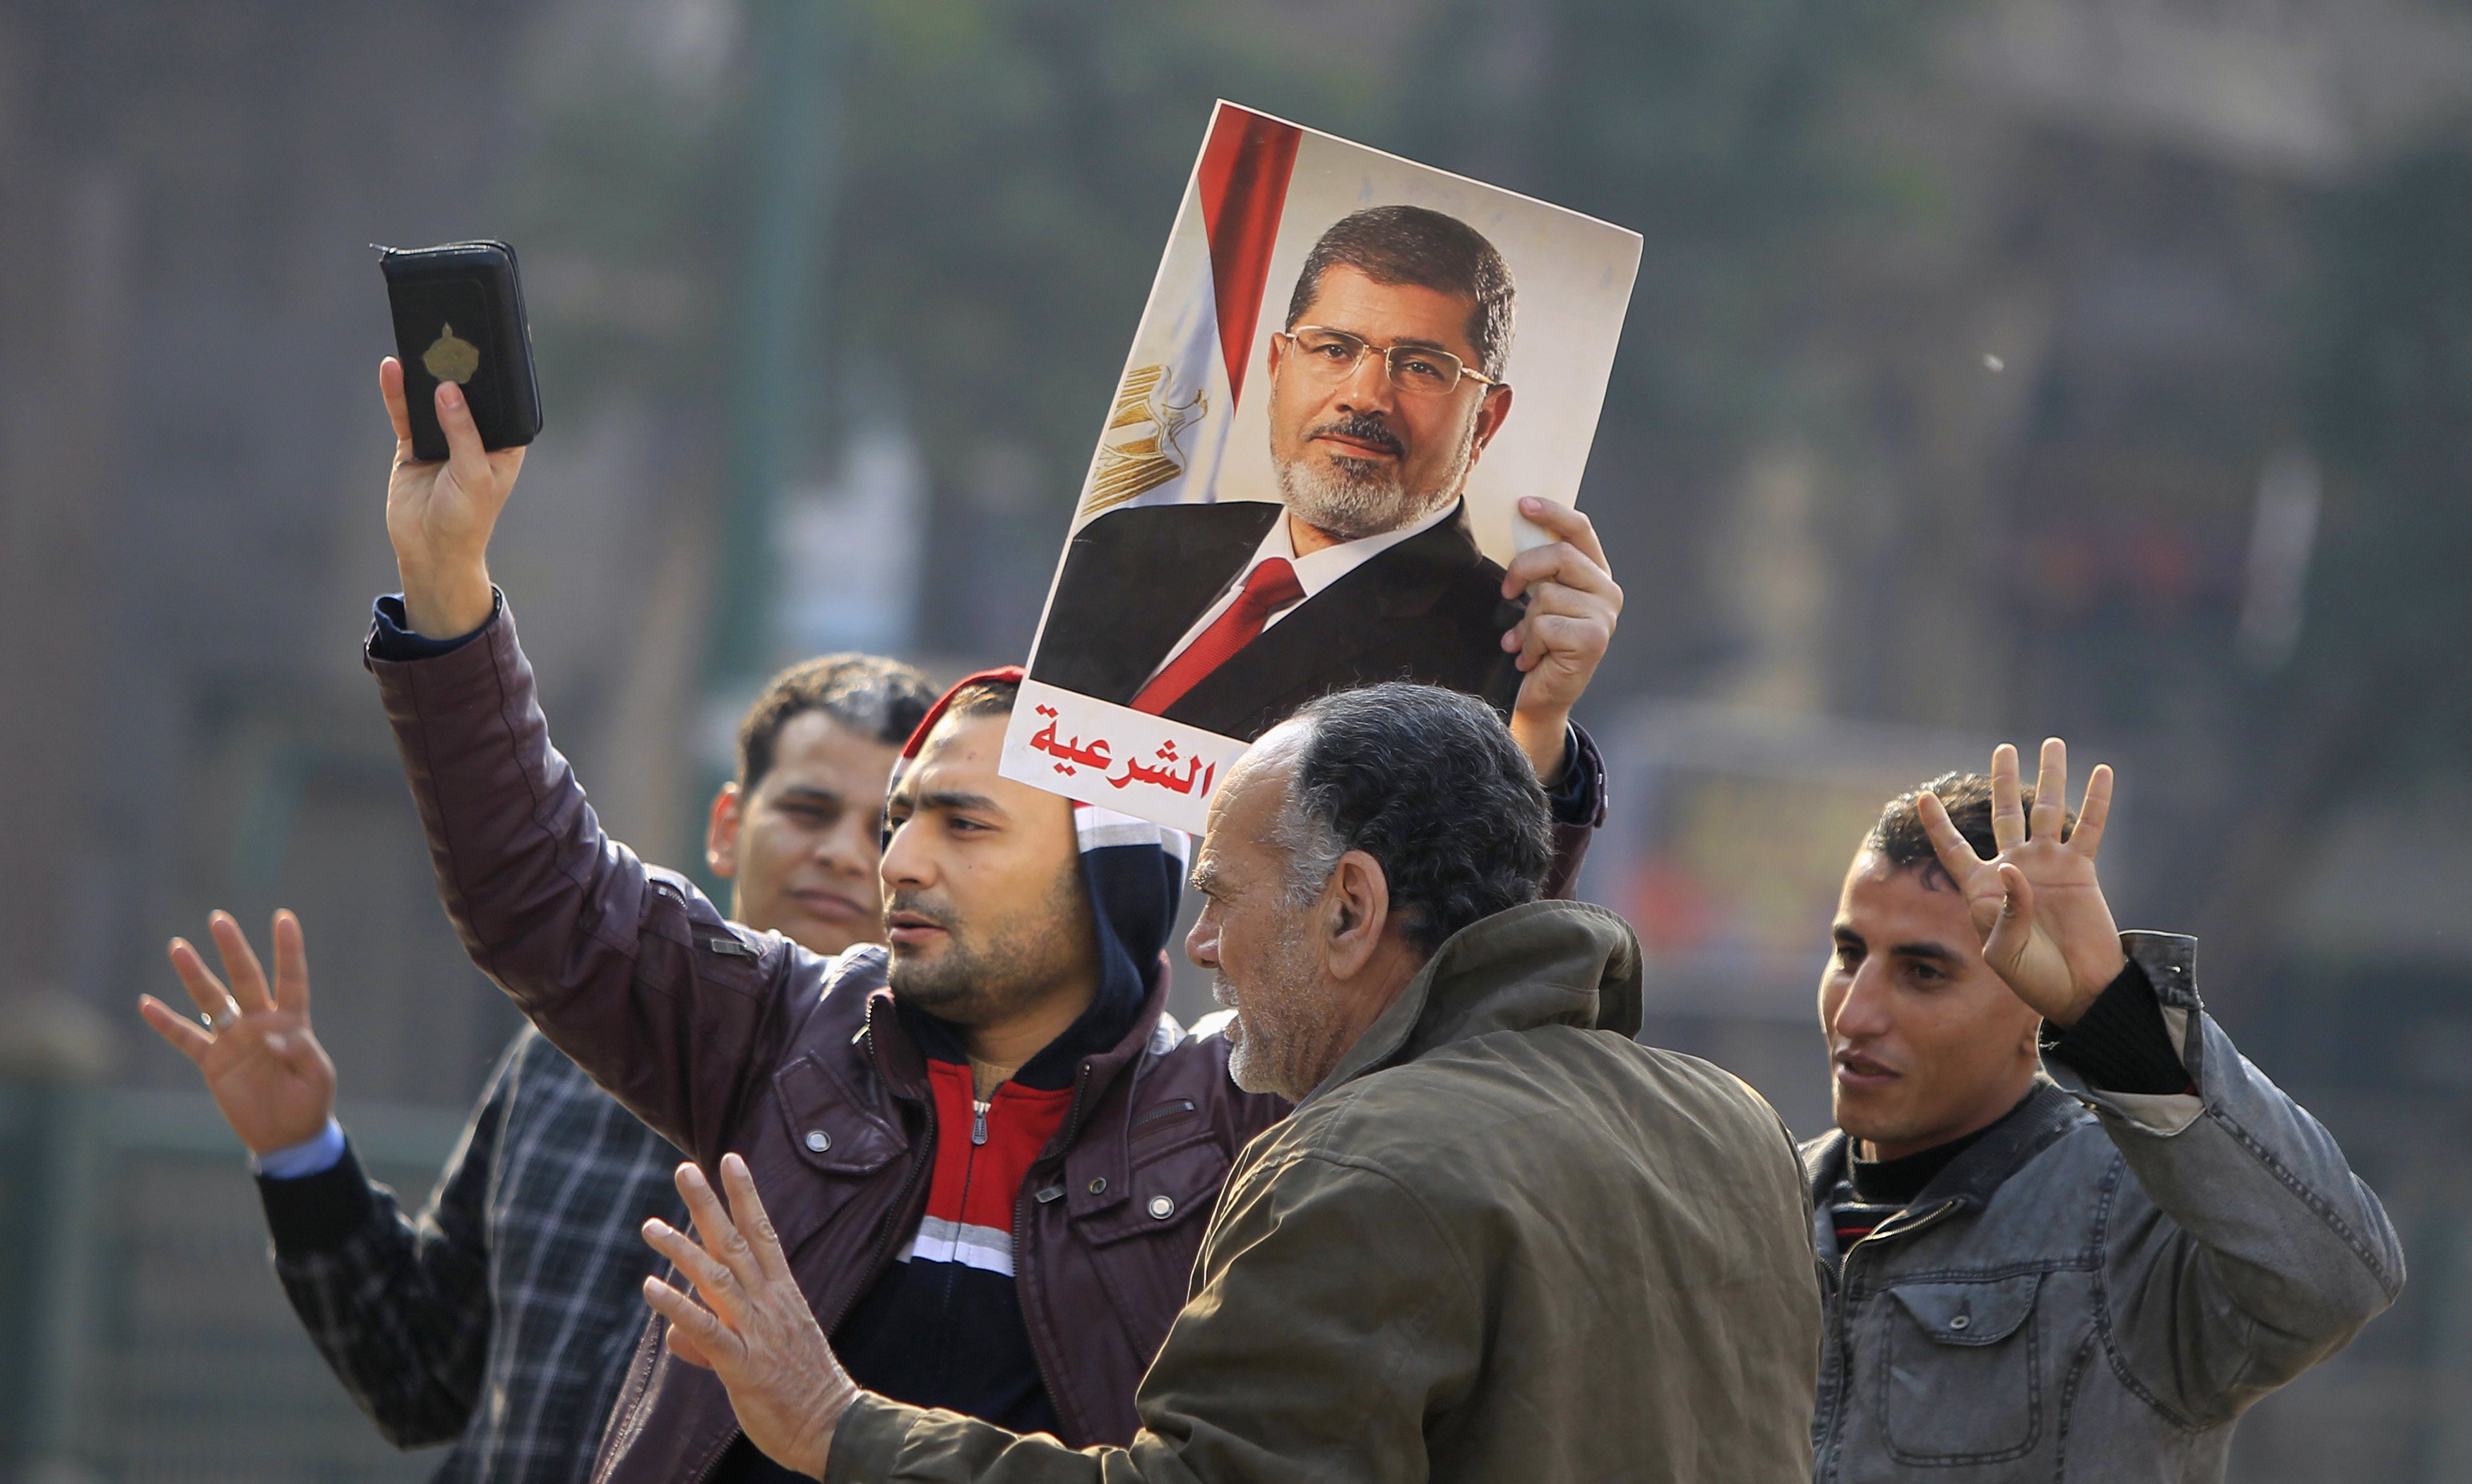 516 Brotherhood affiliates arrested on uprising anniversary - Interior Minister